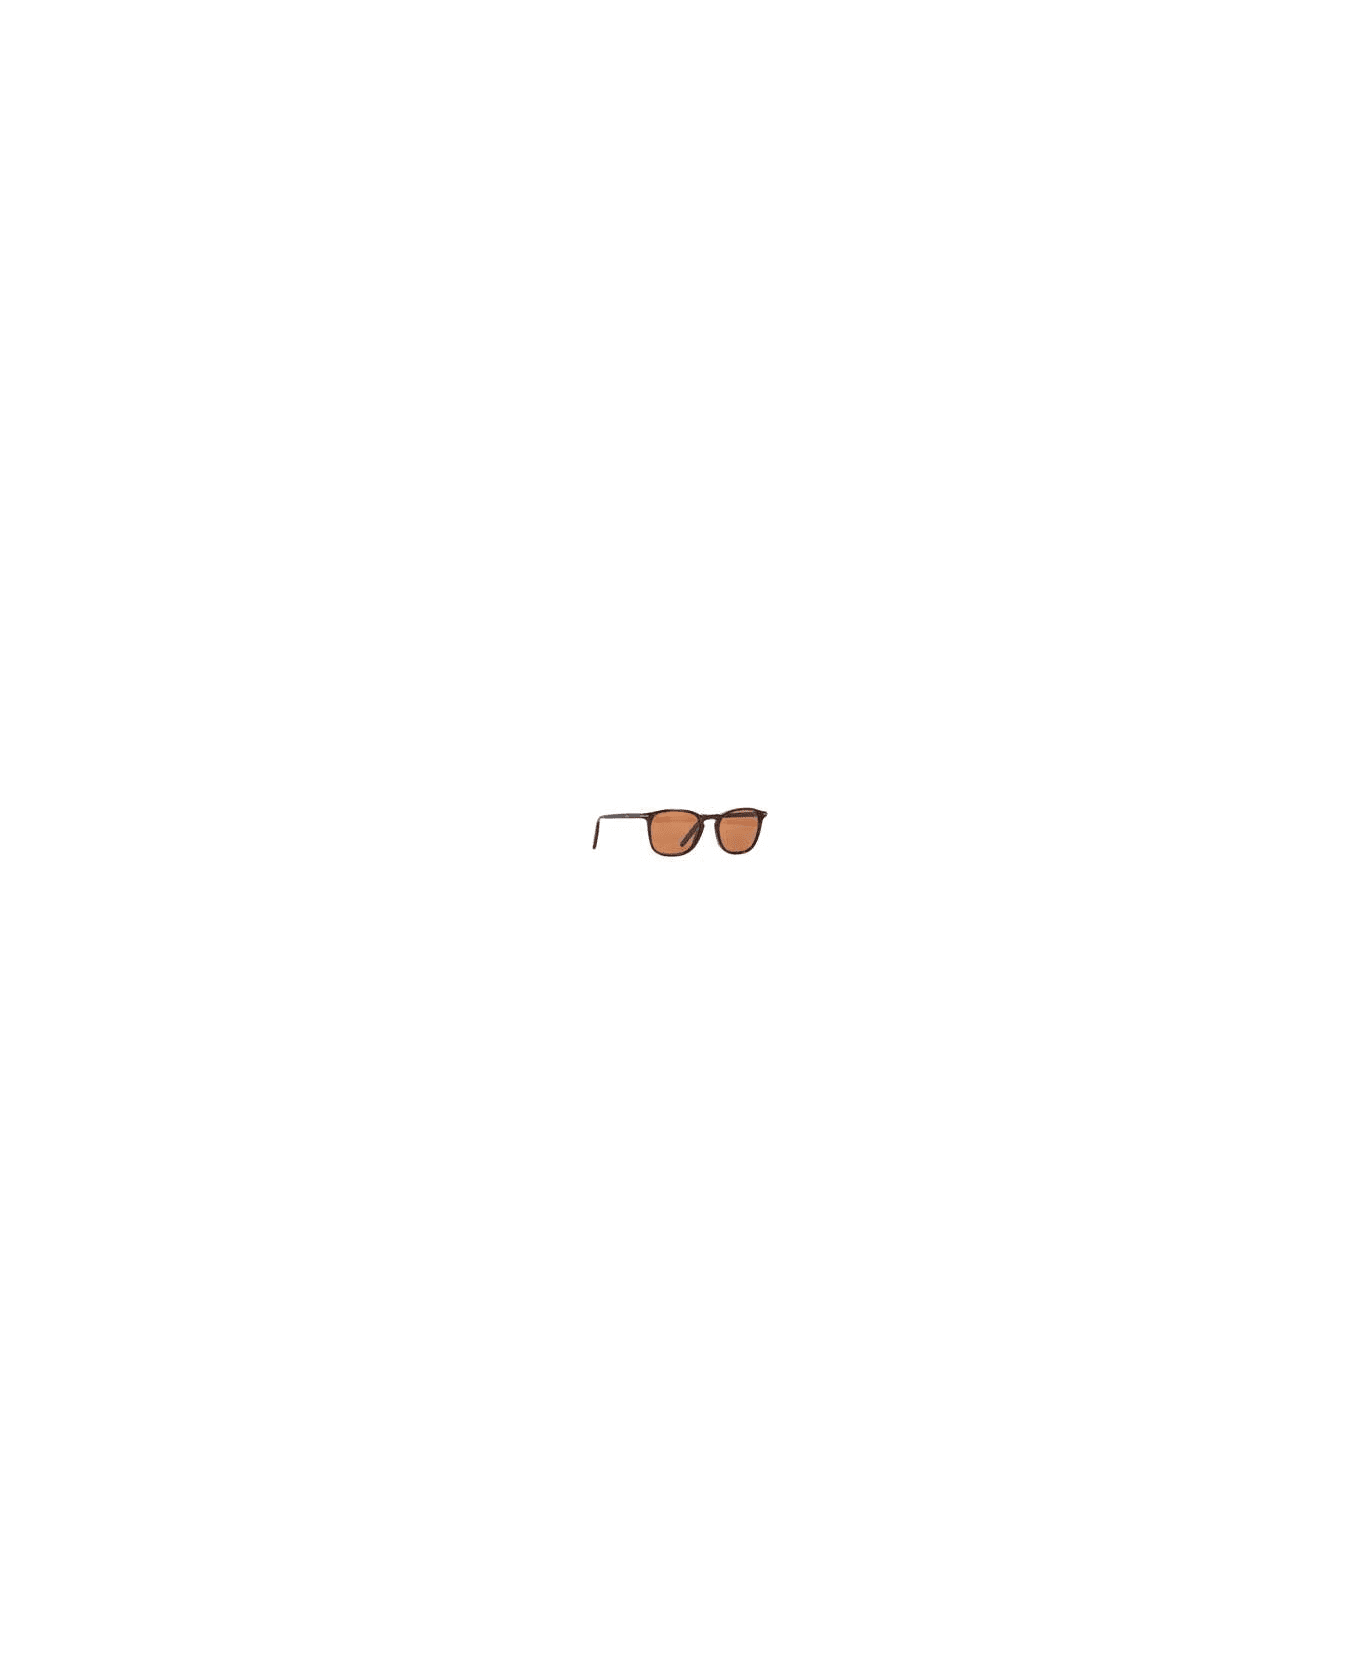 Serengeti Eyewear DELIO SHINY DARK HAVANA / MINE Sunglasses - Delio サングラス